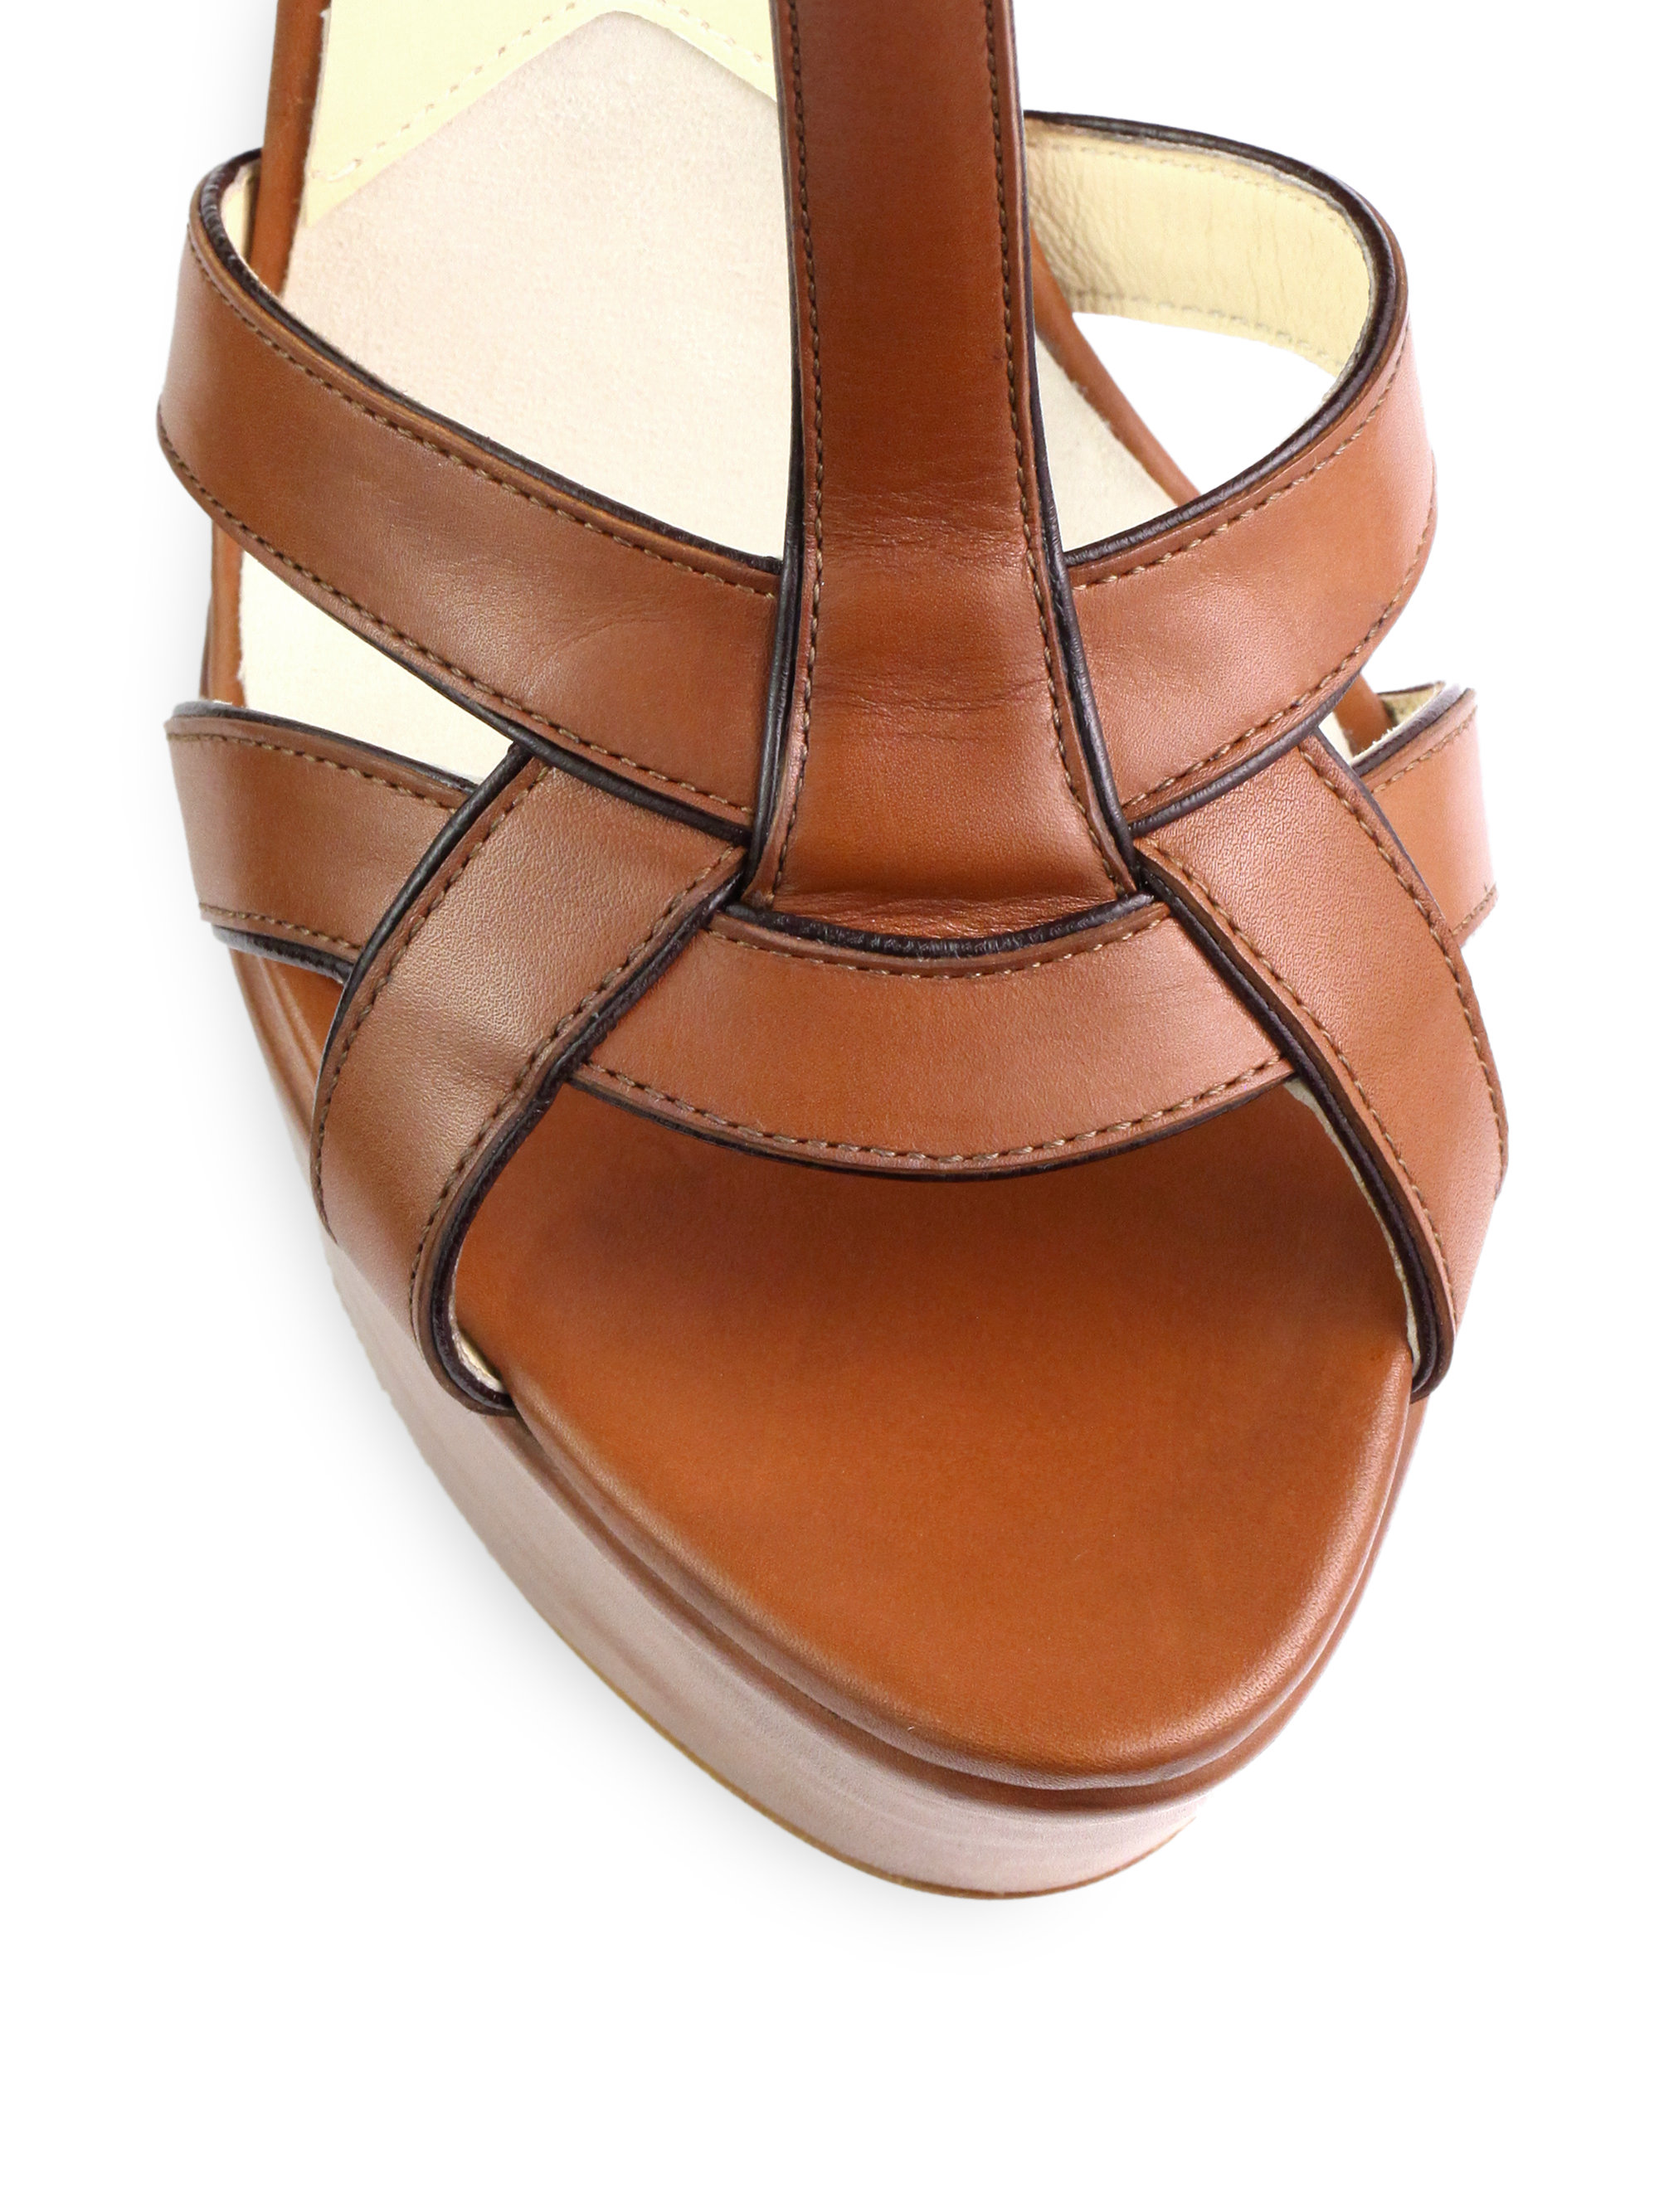 brown wedge sandals